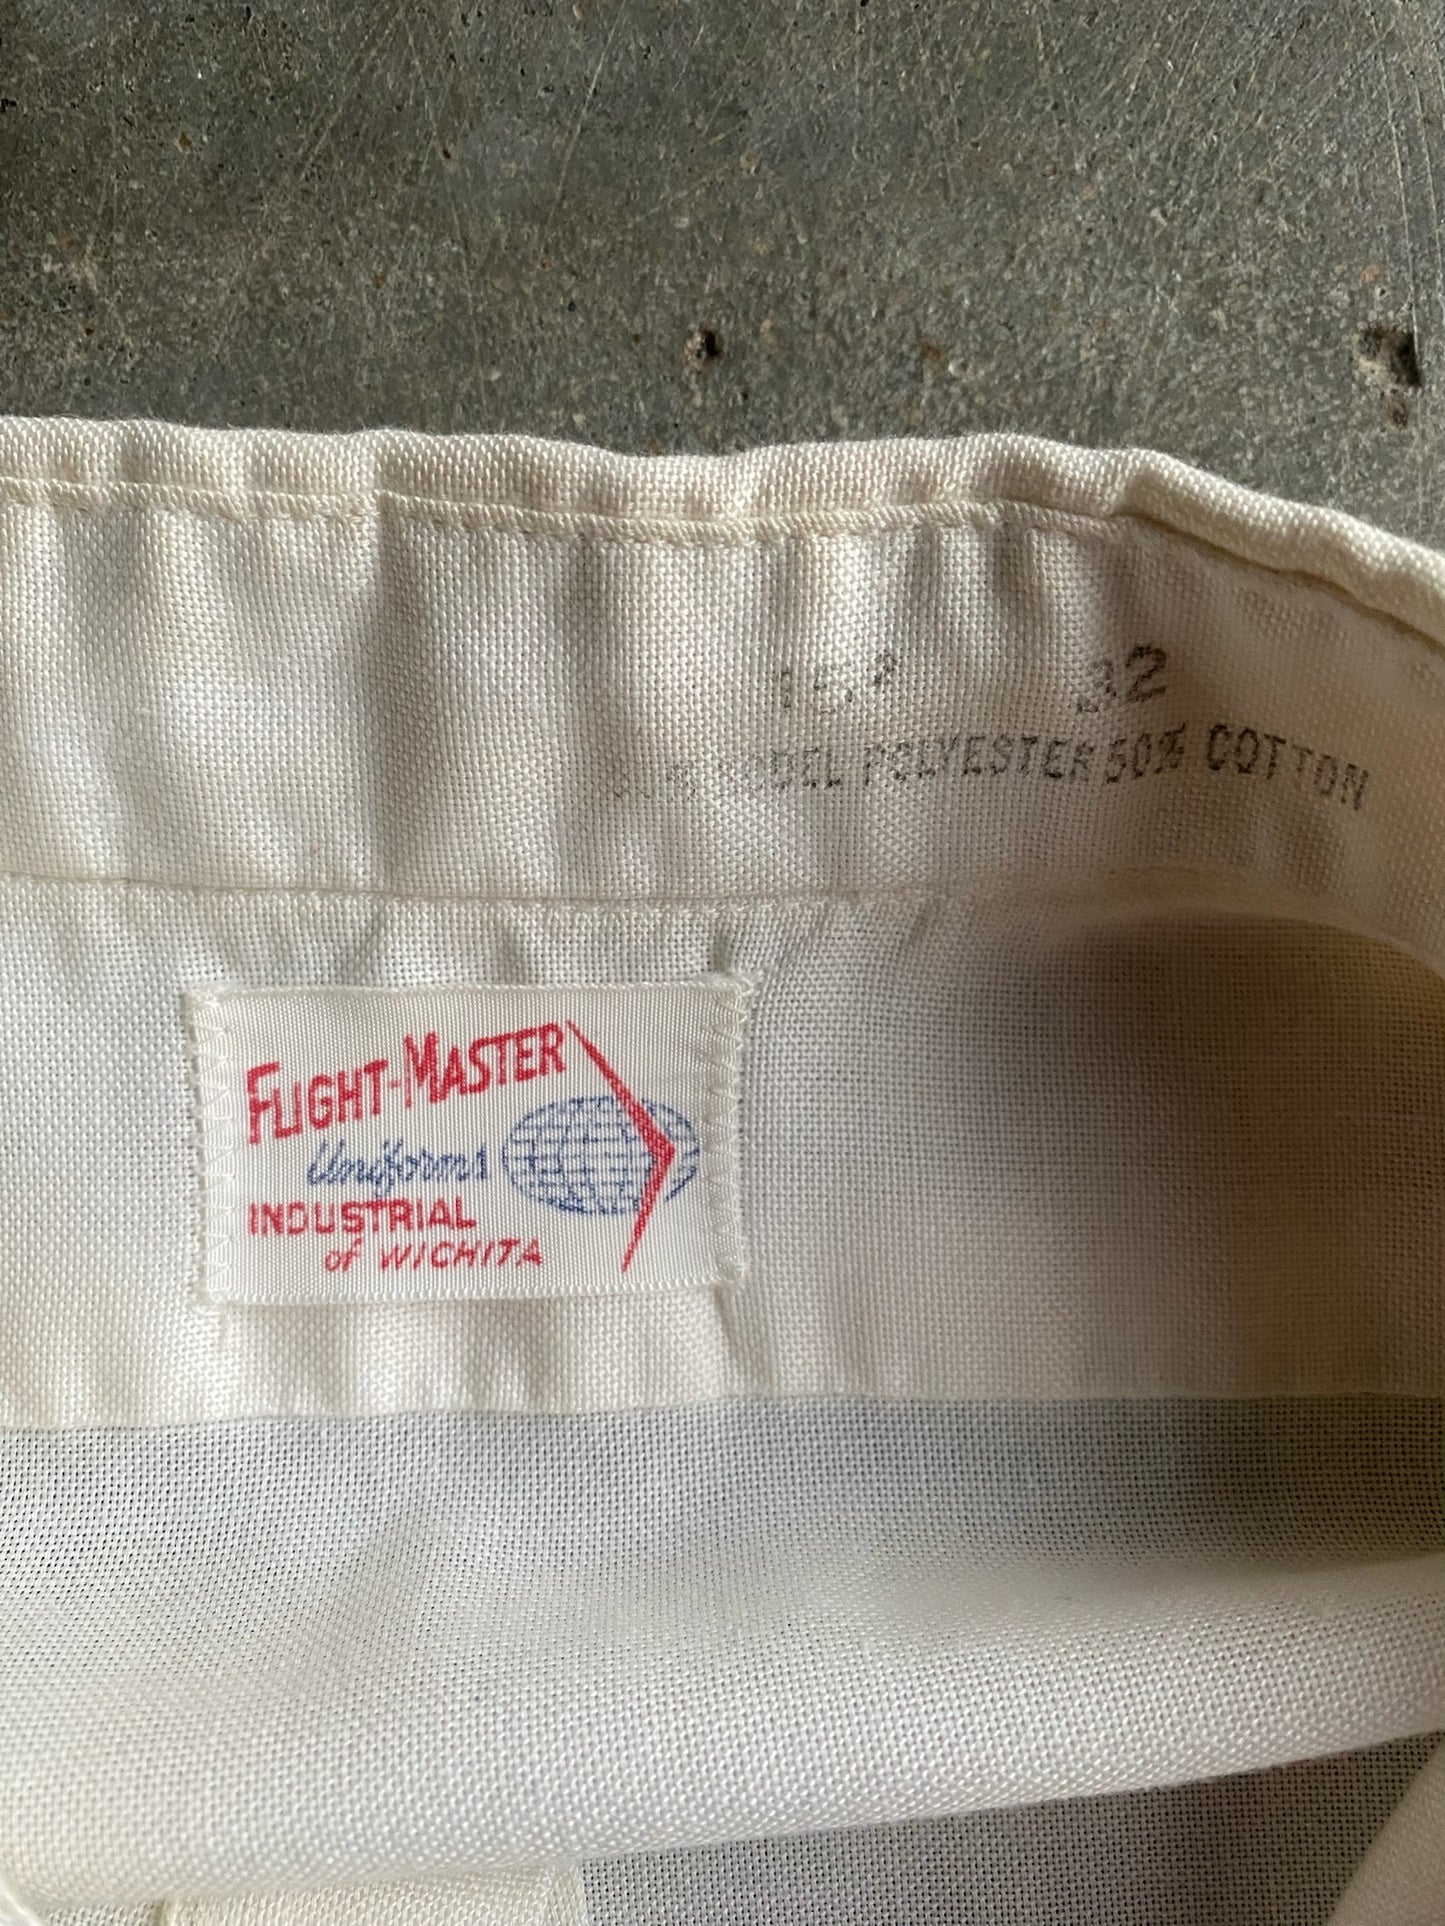 Vintage Flight Master Button Up Shirt - L